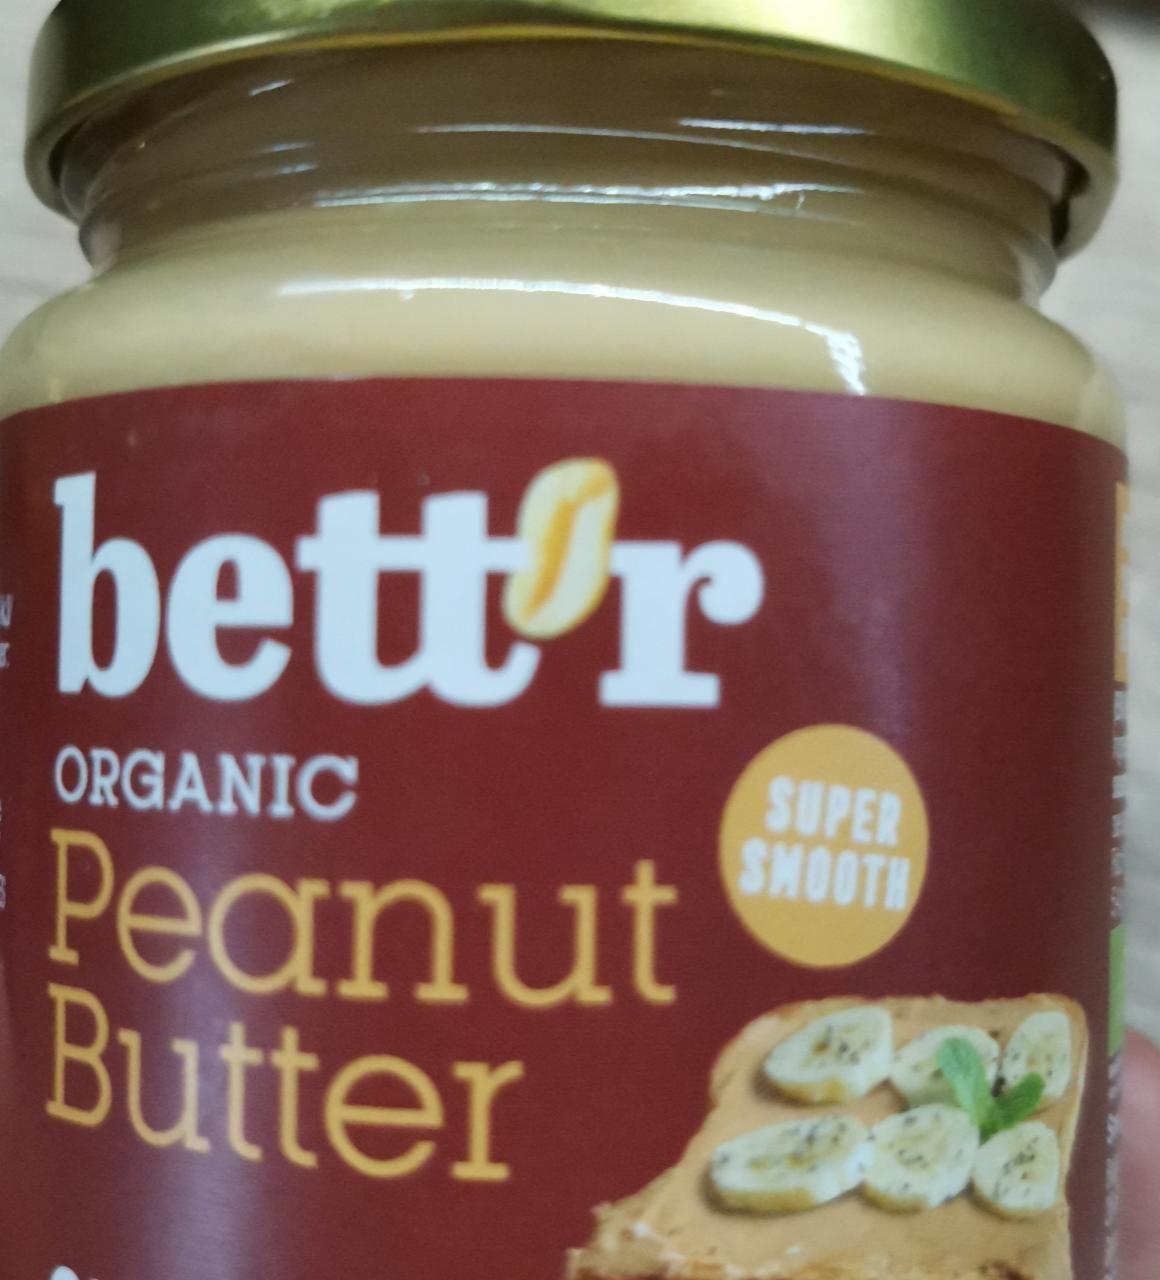 Fotografie - Organic Peanut Butter Super Smooth Bett'r